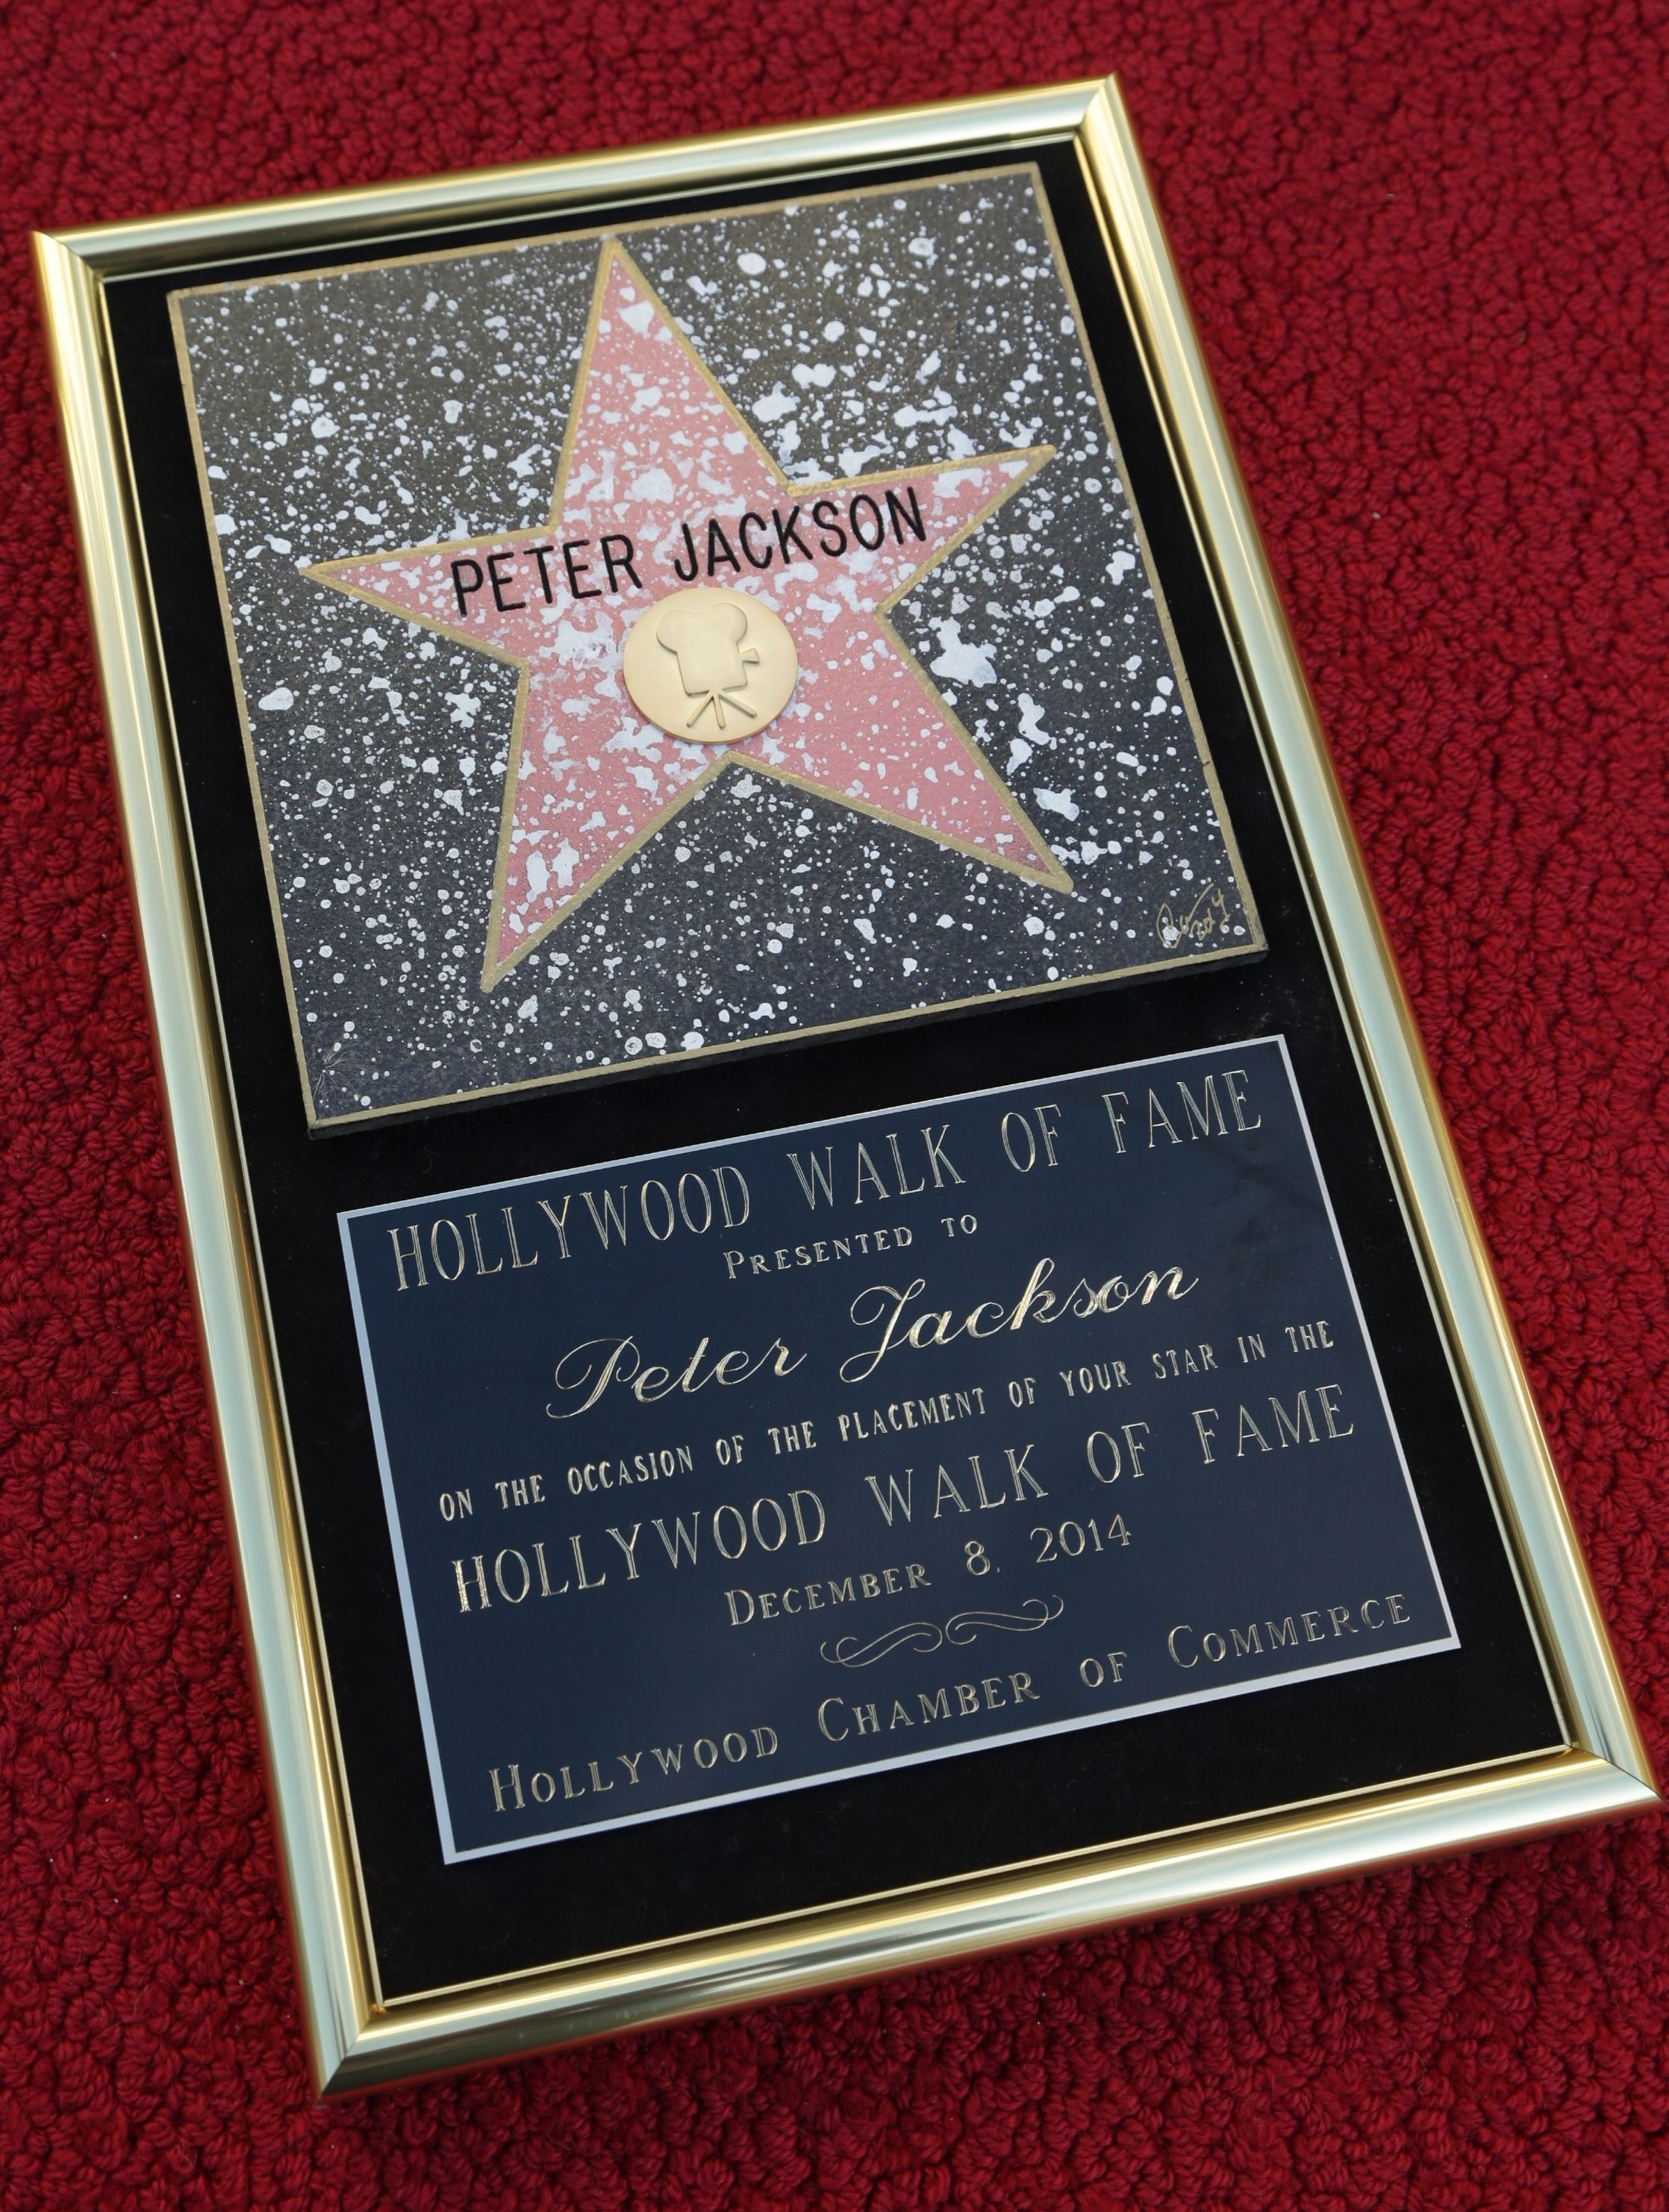 Peter Jackson - Walk of Fame star - December 8, 2014